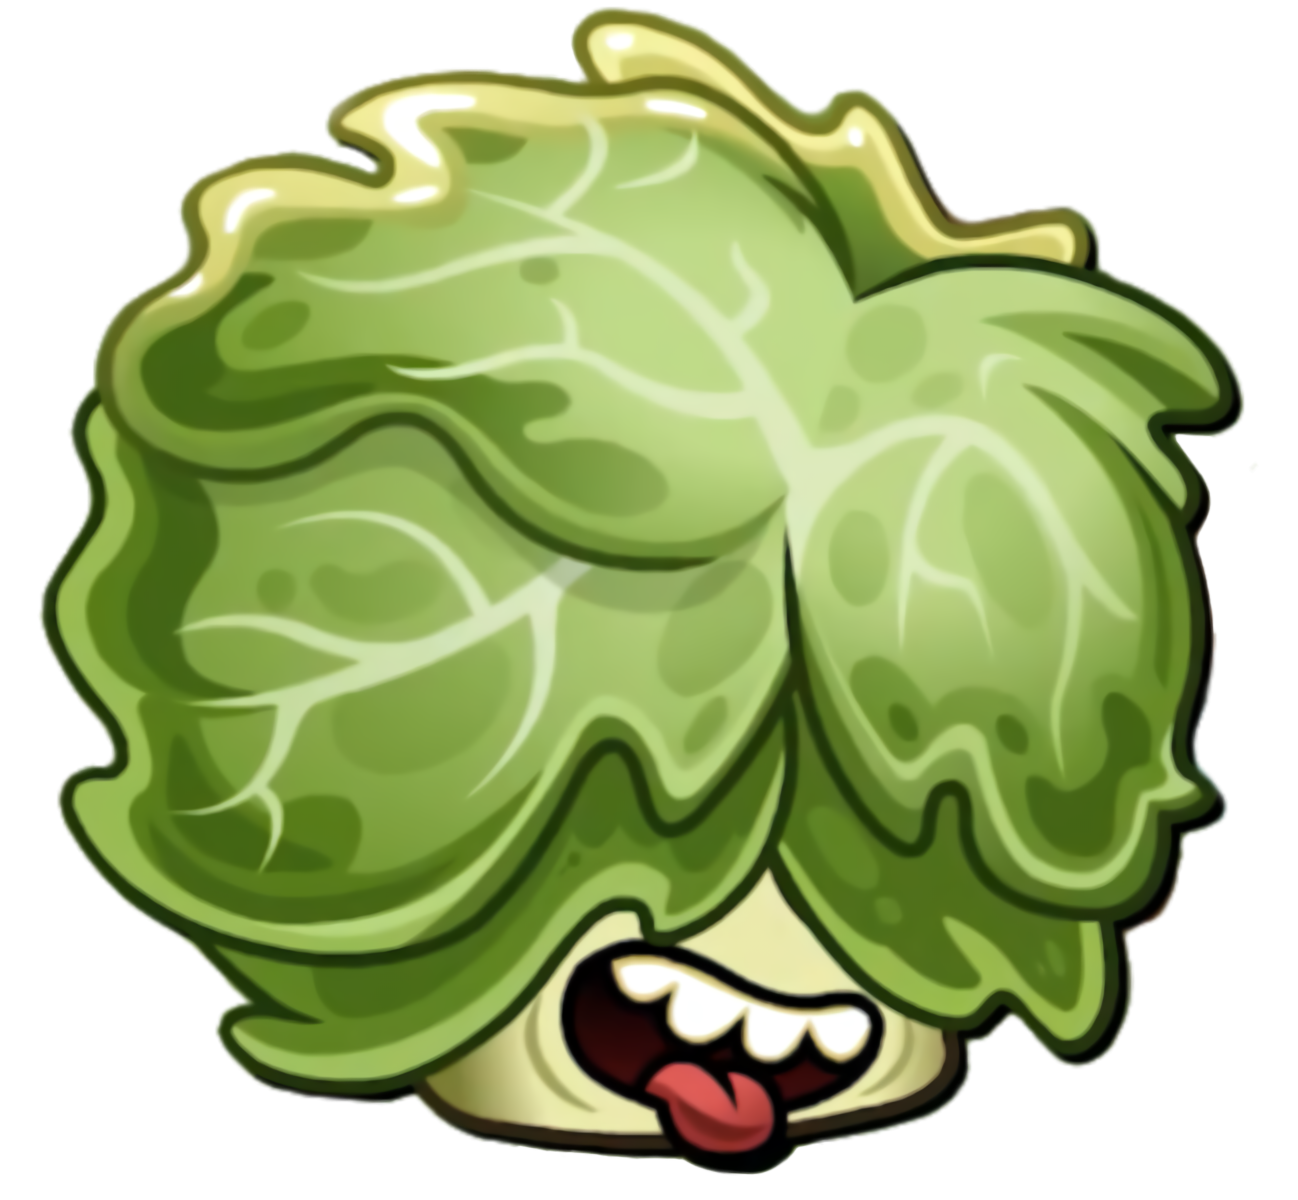 Plants vz. Headbutter lettuce pvz2. ПВЗ растения против зомби 2. Латук PVZ 2. Plants vs Zombies латук.